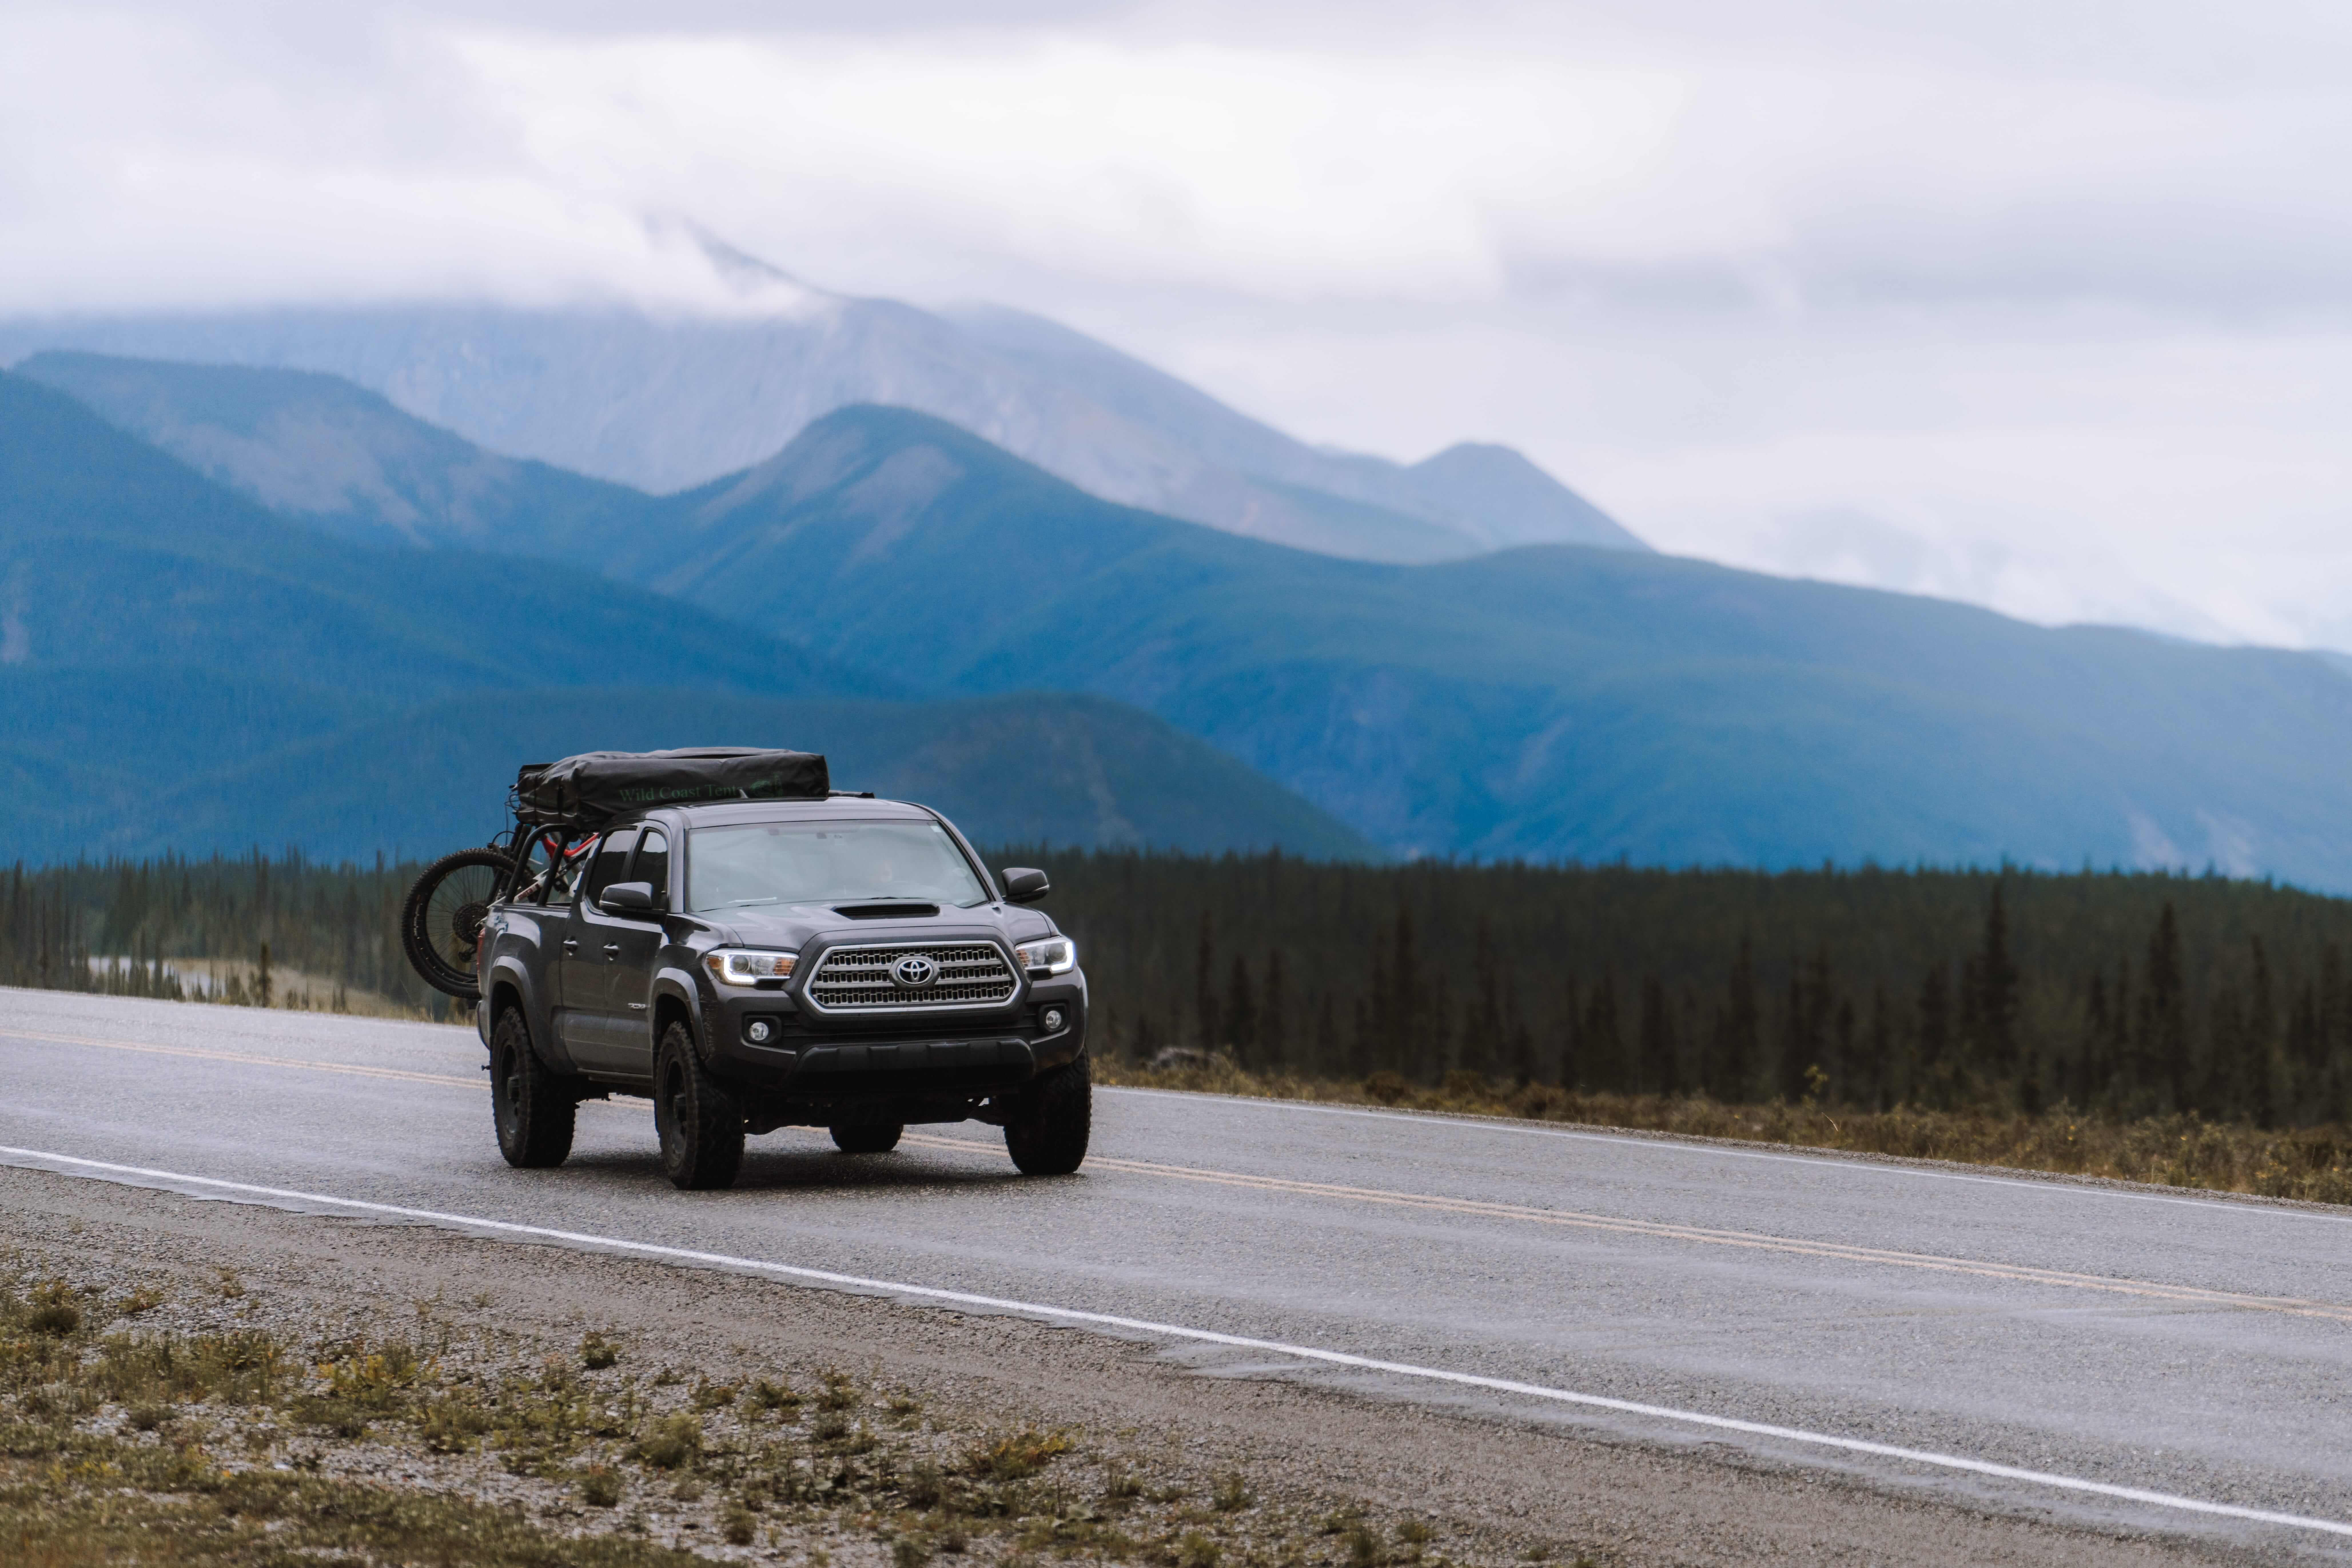 Toyota Tacoma Adventure: Yukon Road Trip